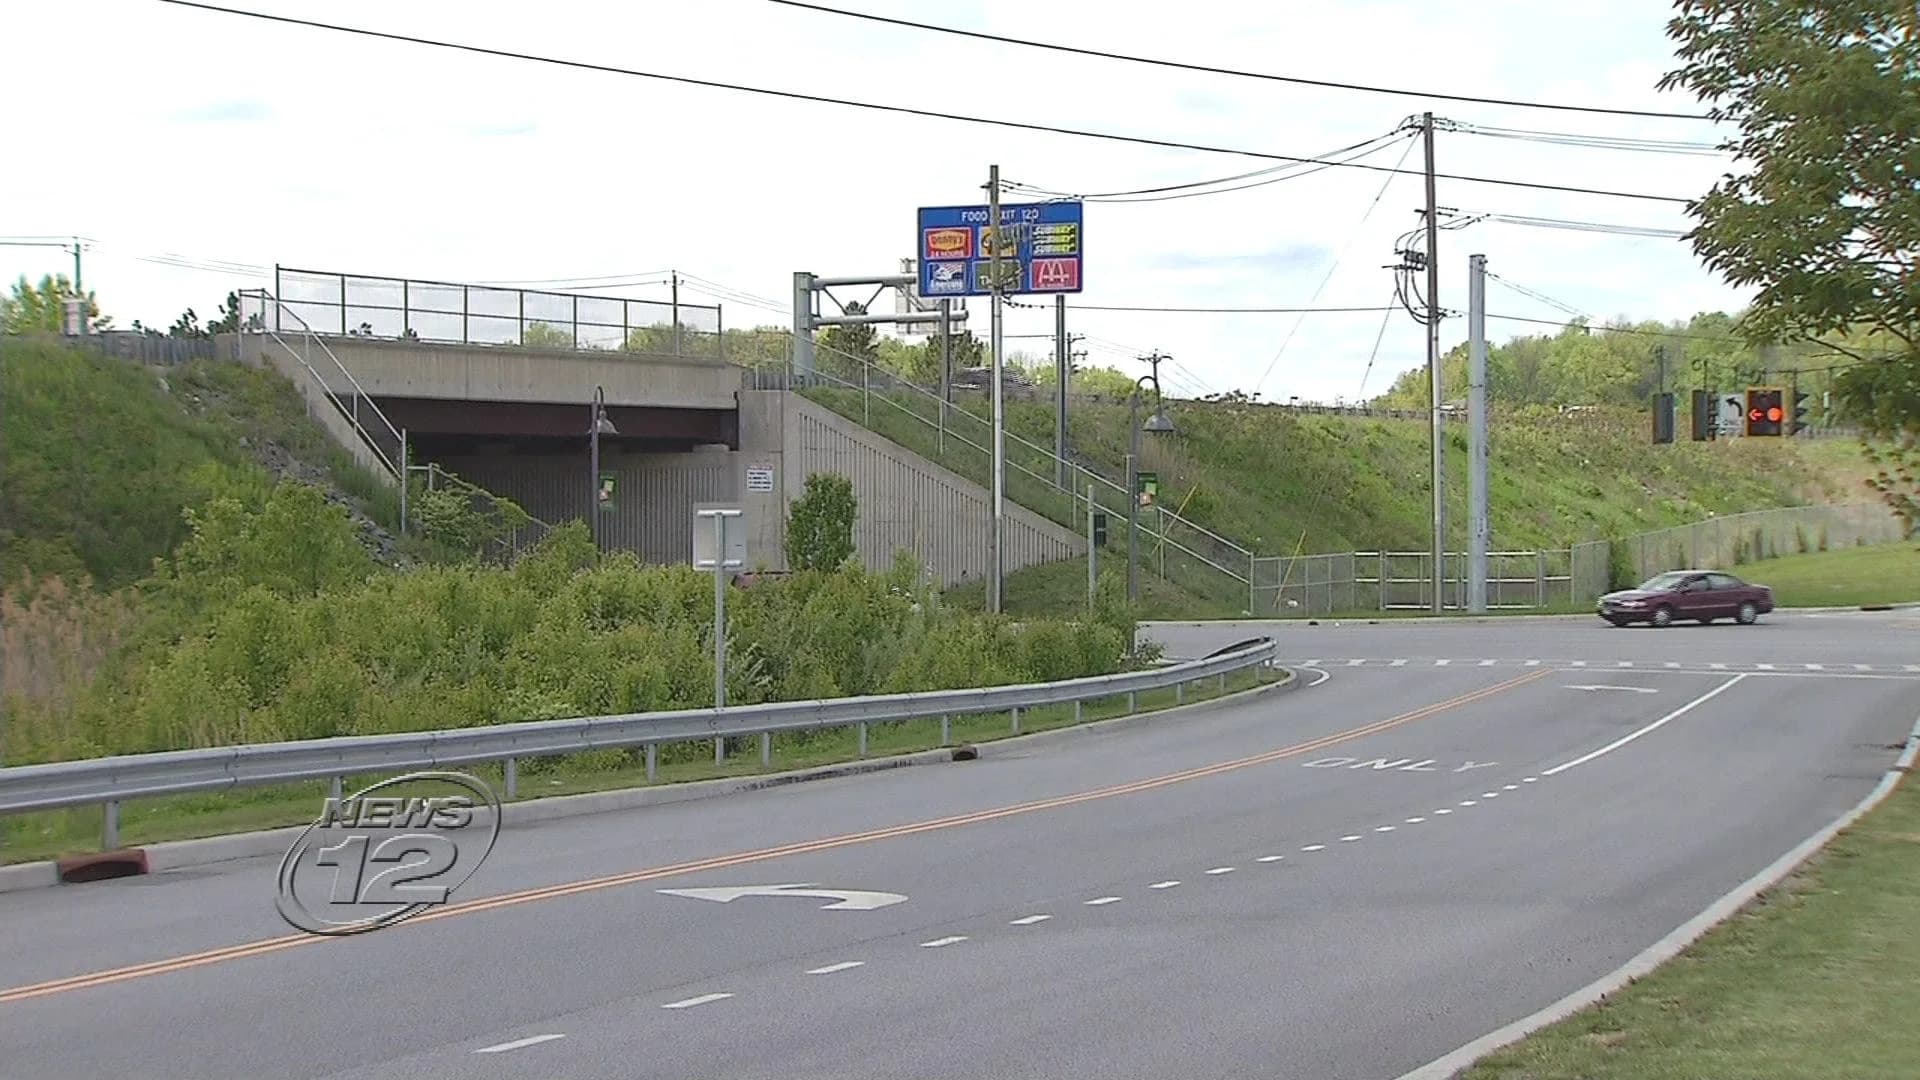 Officials ID teen killed crossing Wallkill highway